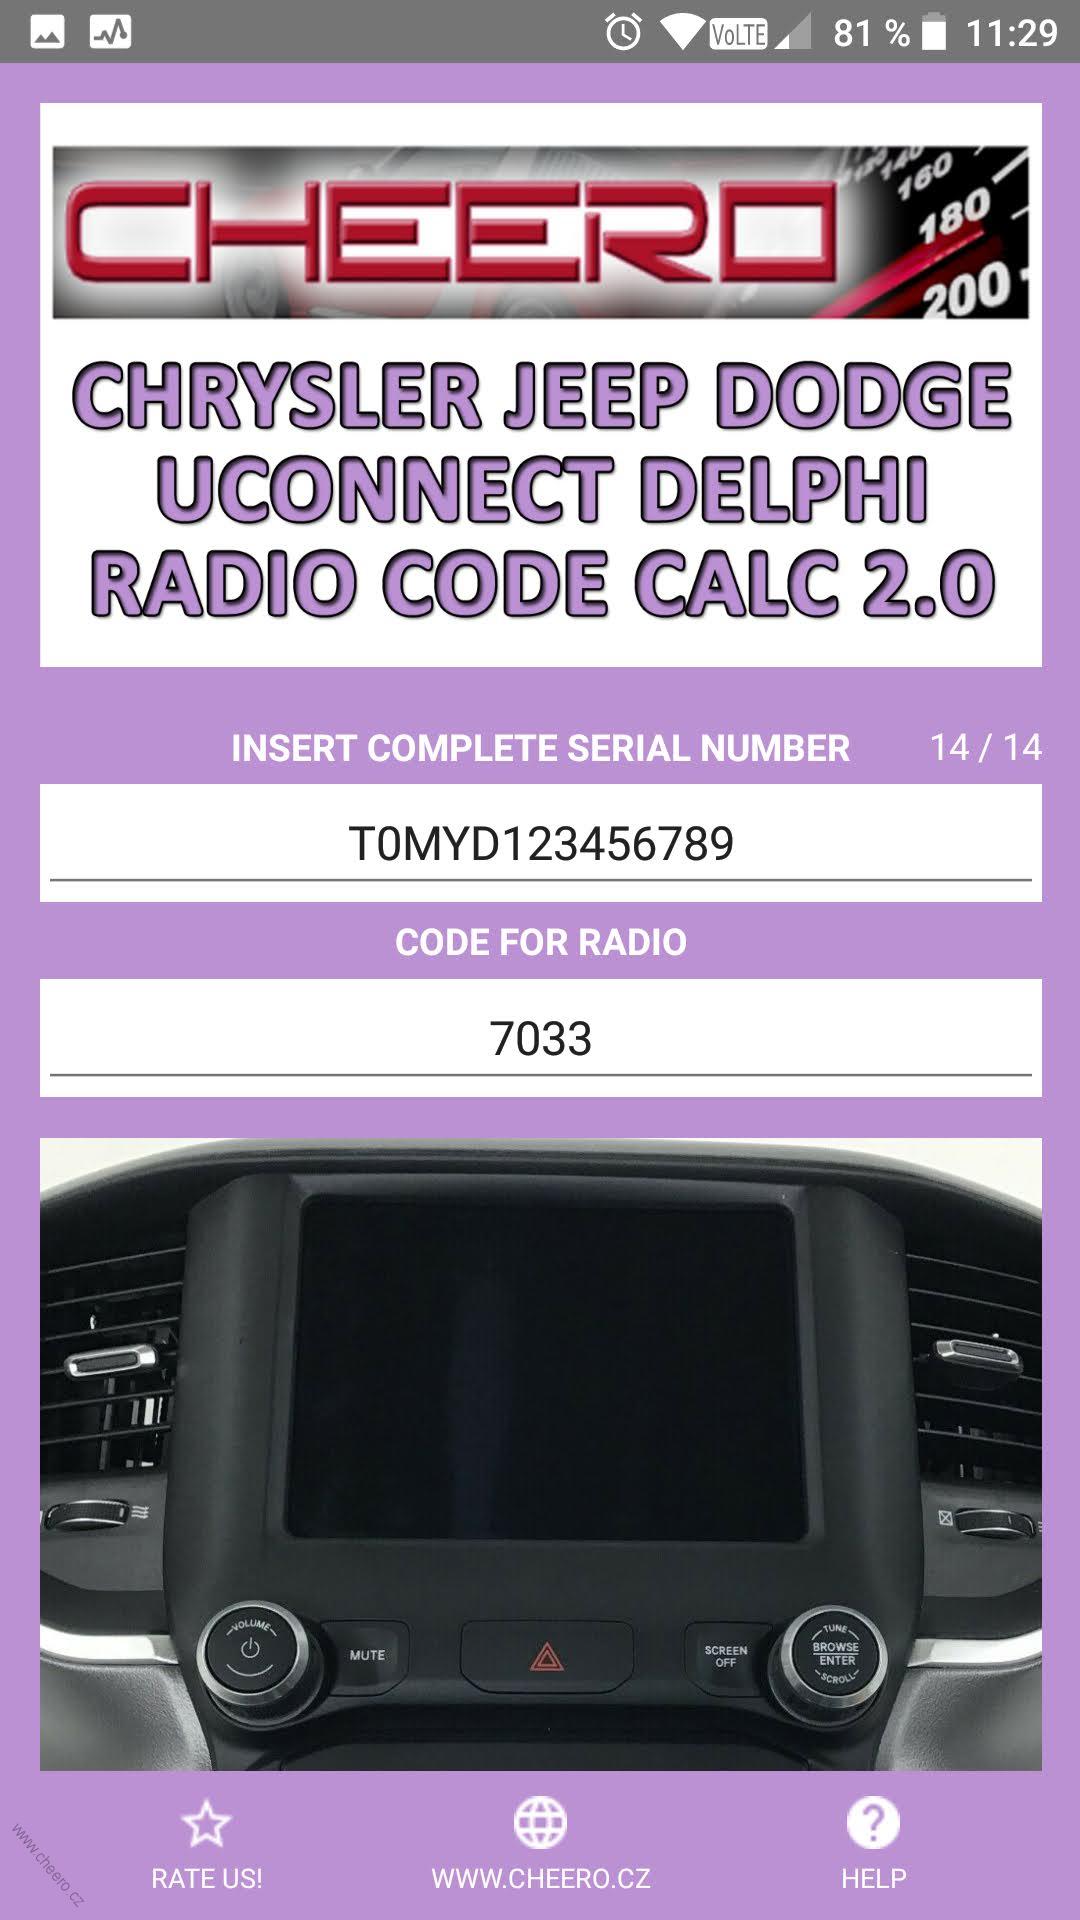 CHRYSLER JEEP DODGE DELPHI UCONNECT - RADIO CODE CALC